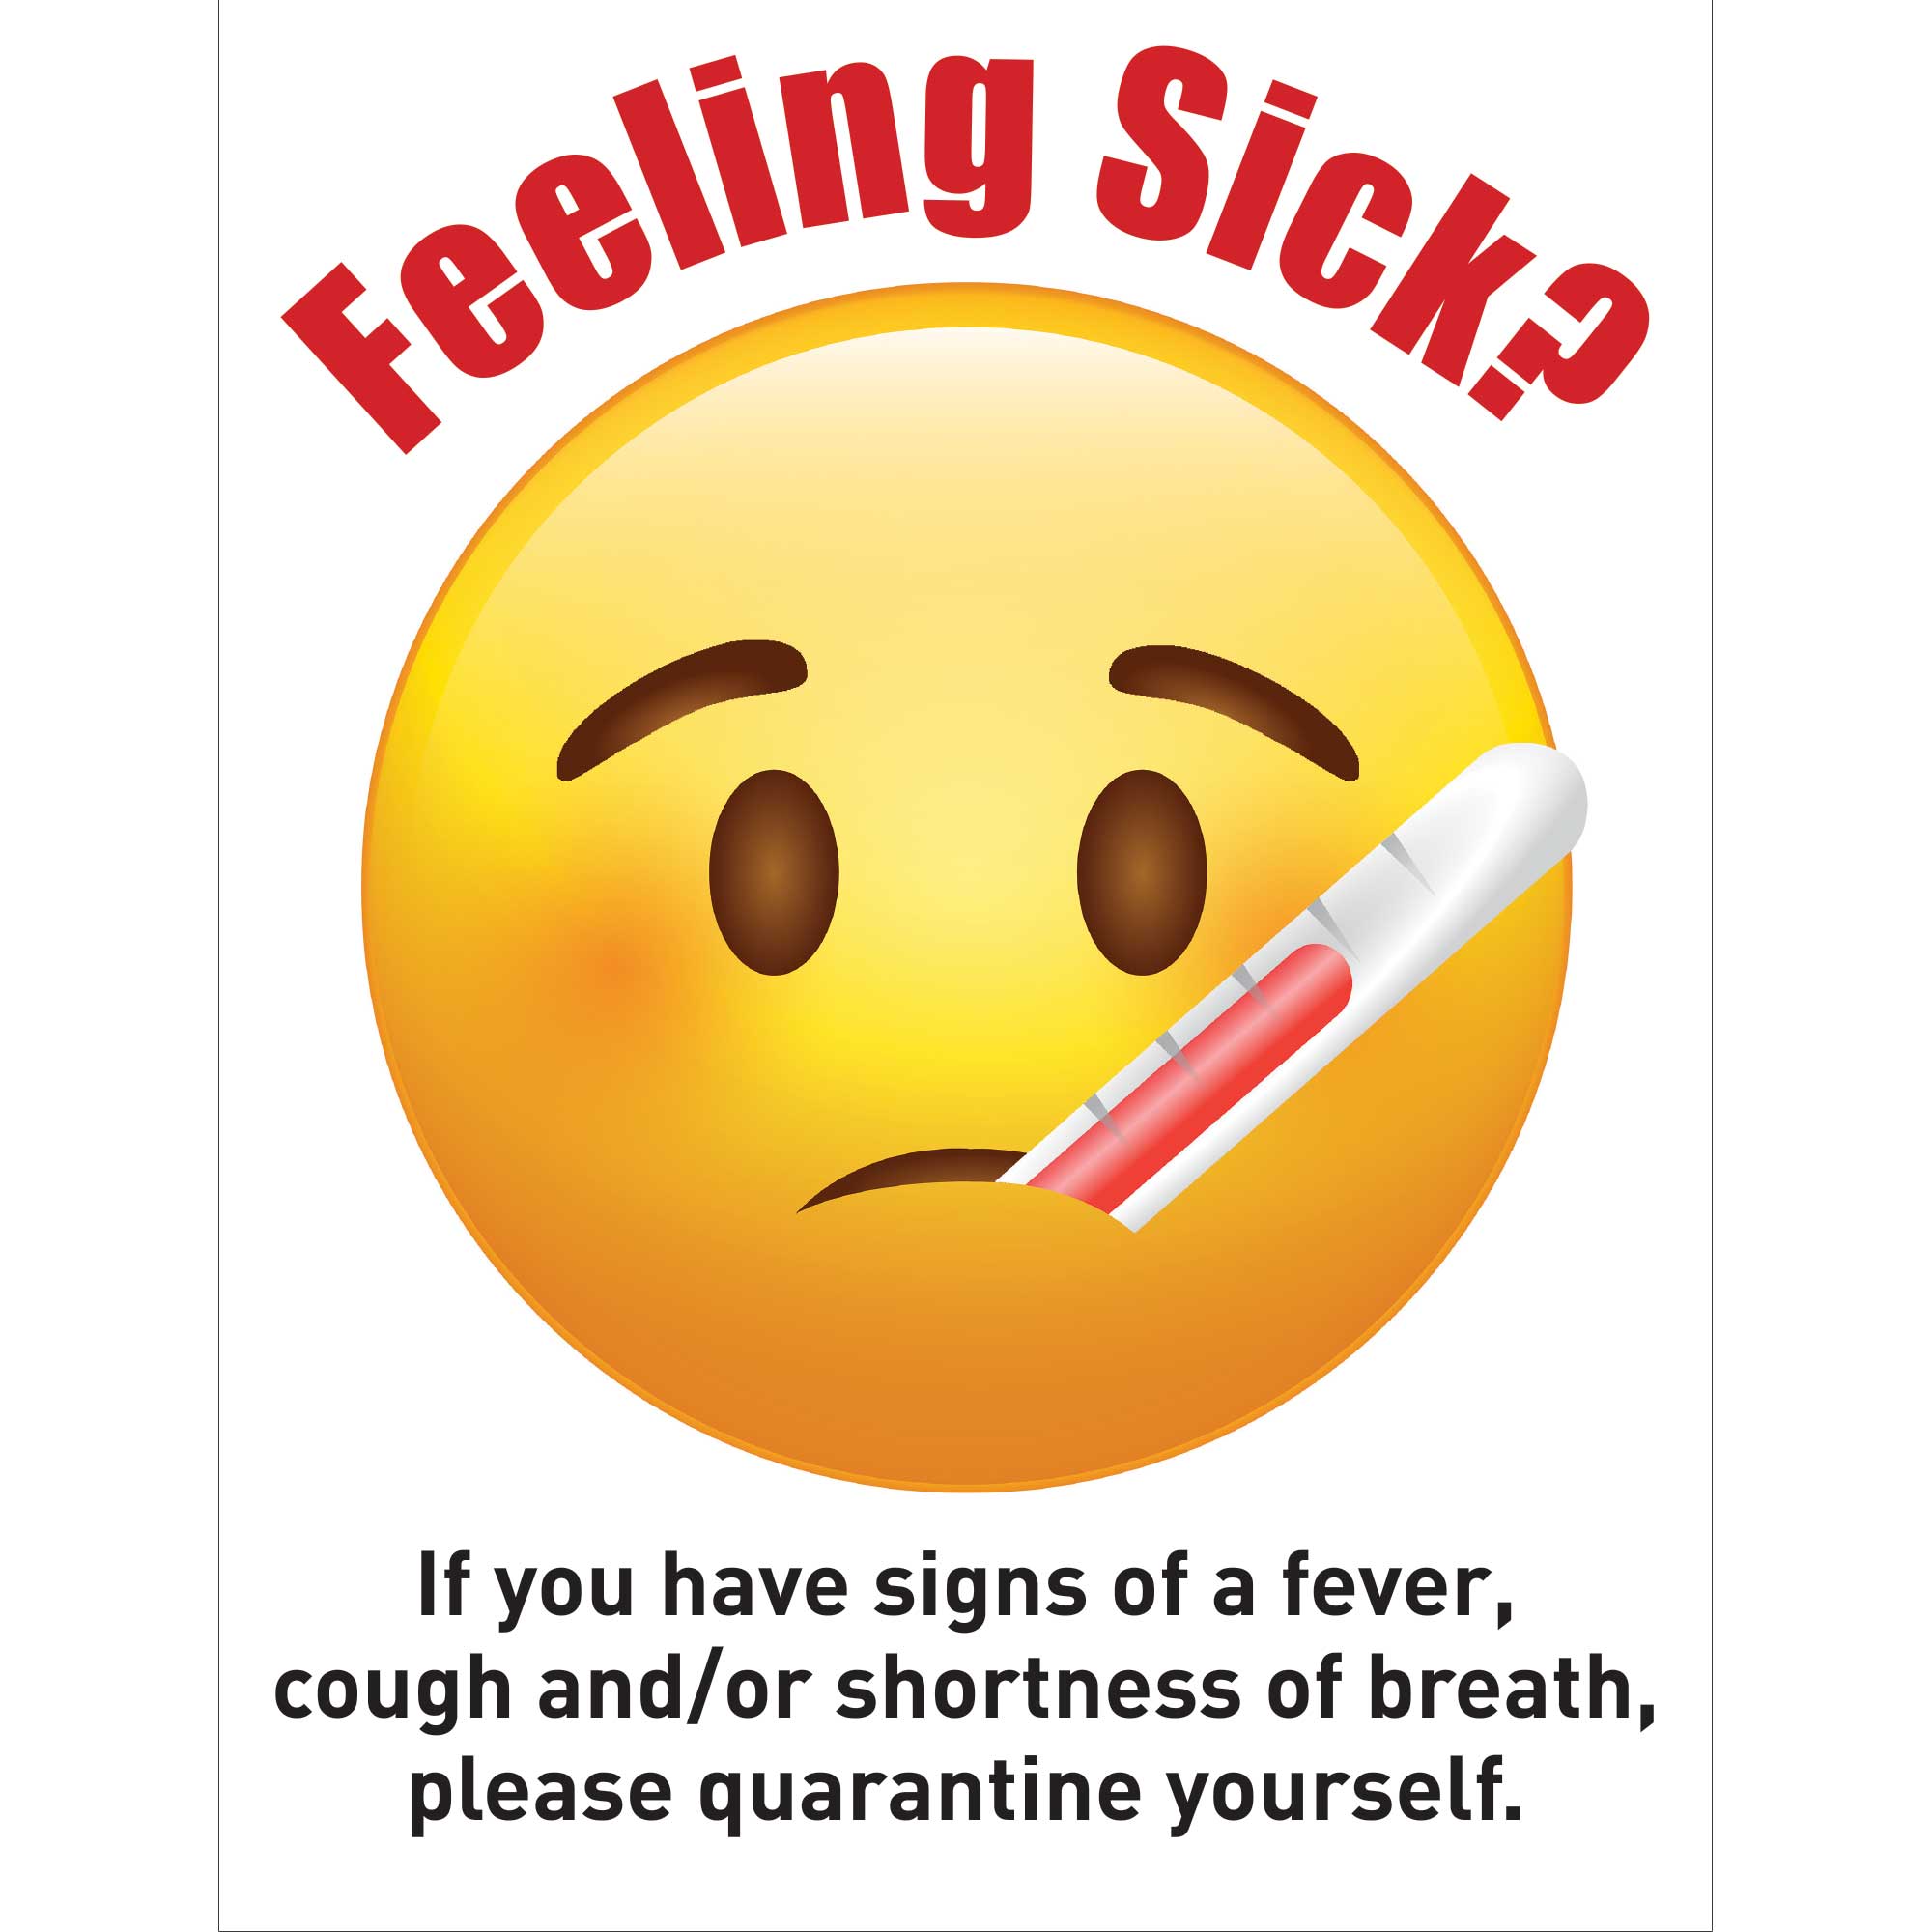 sick of being sick